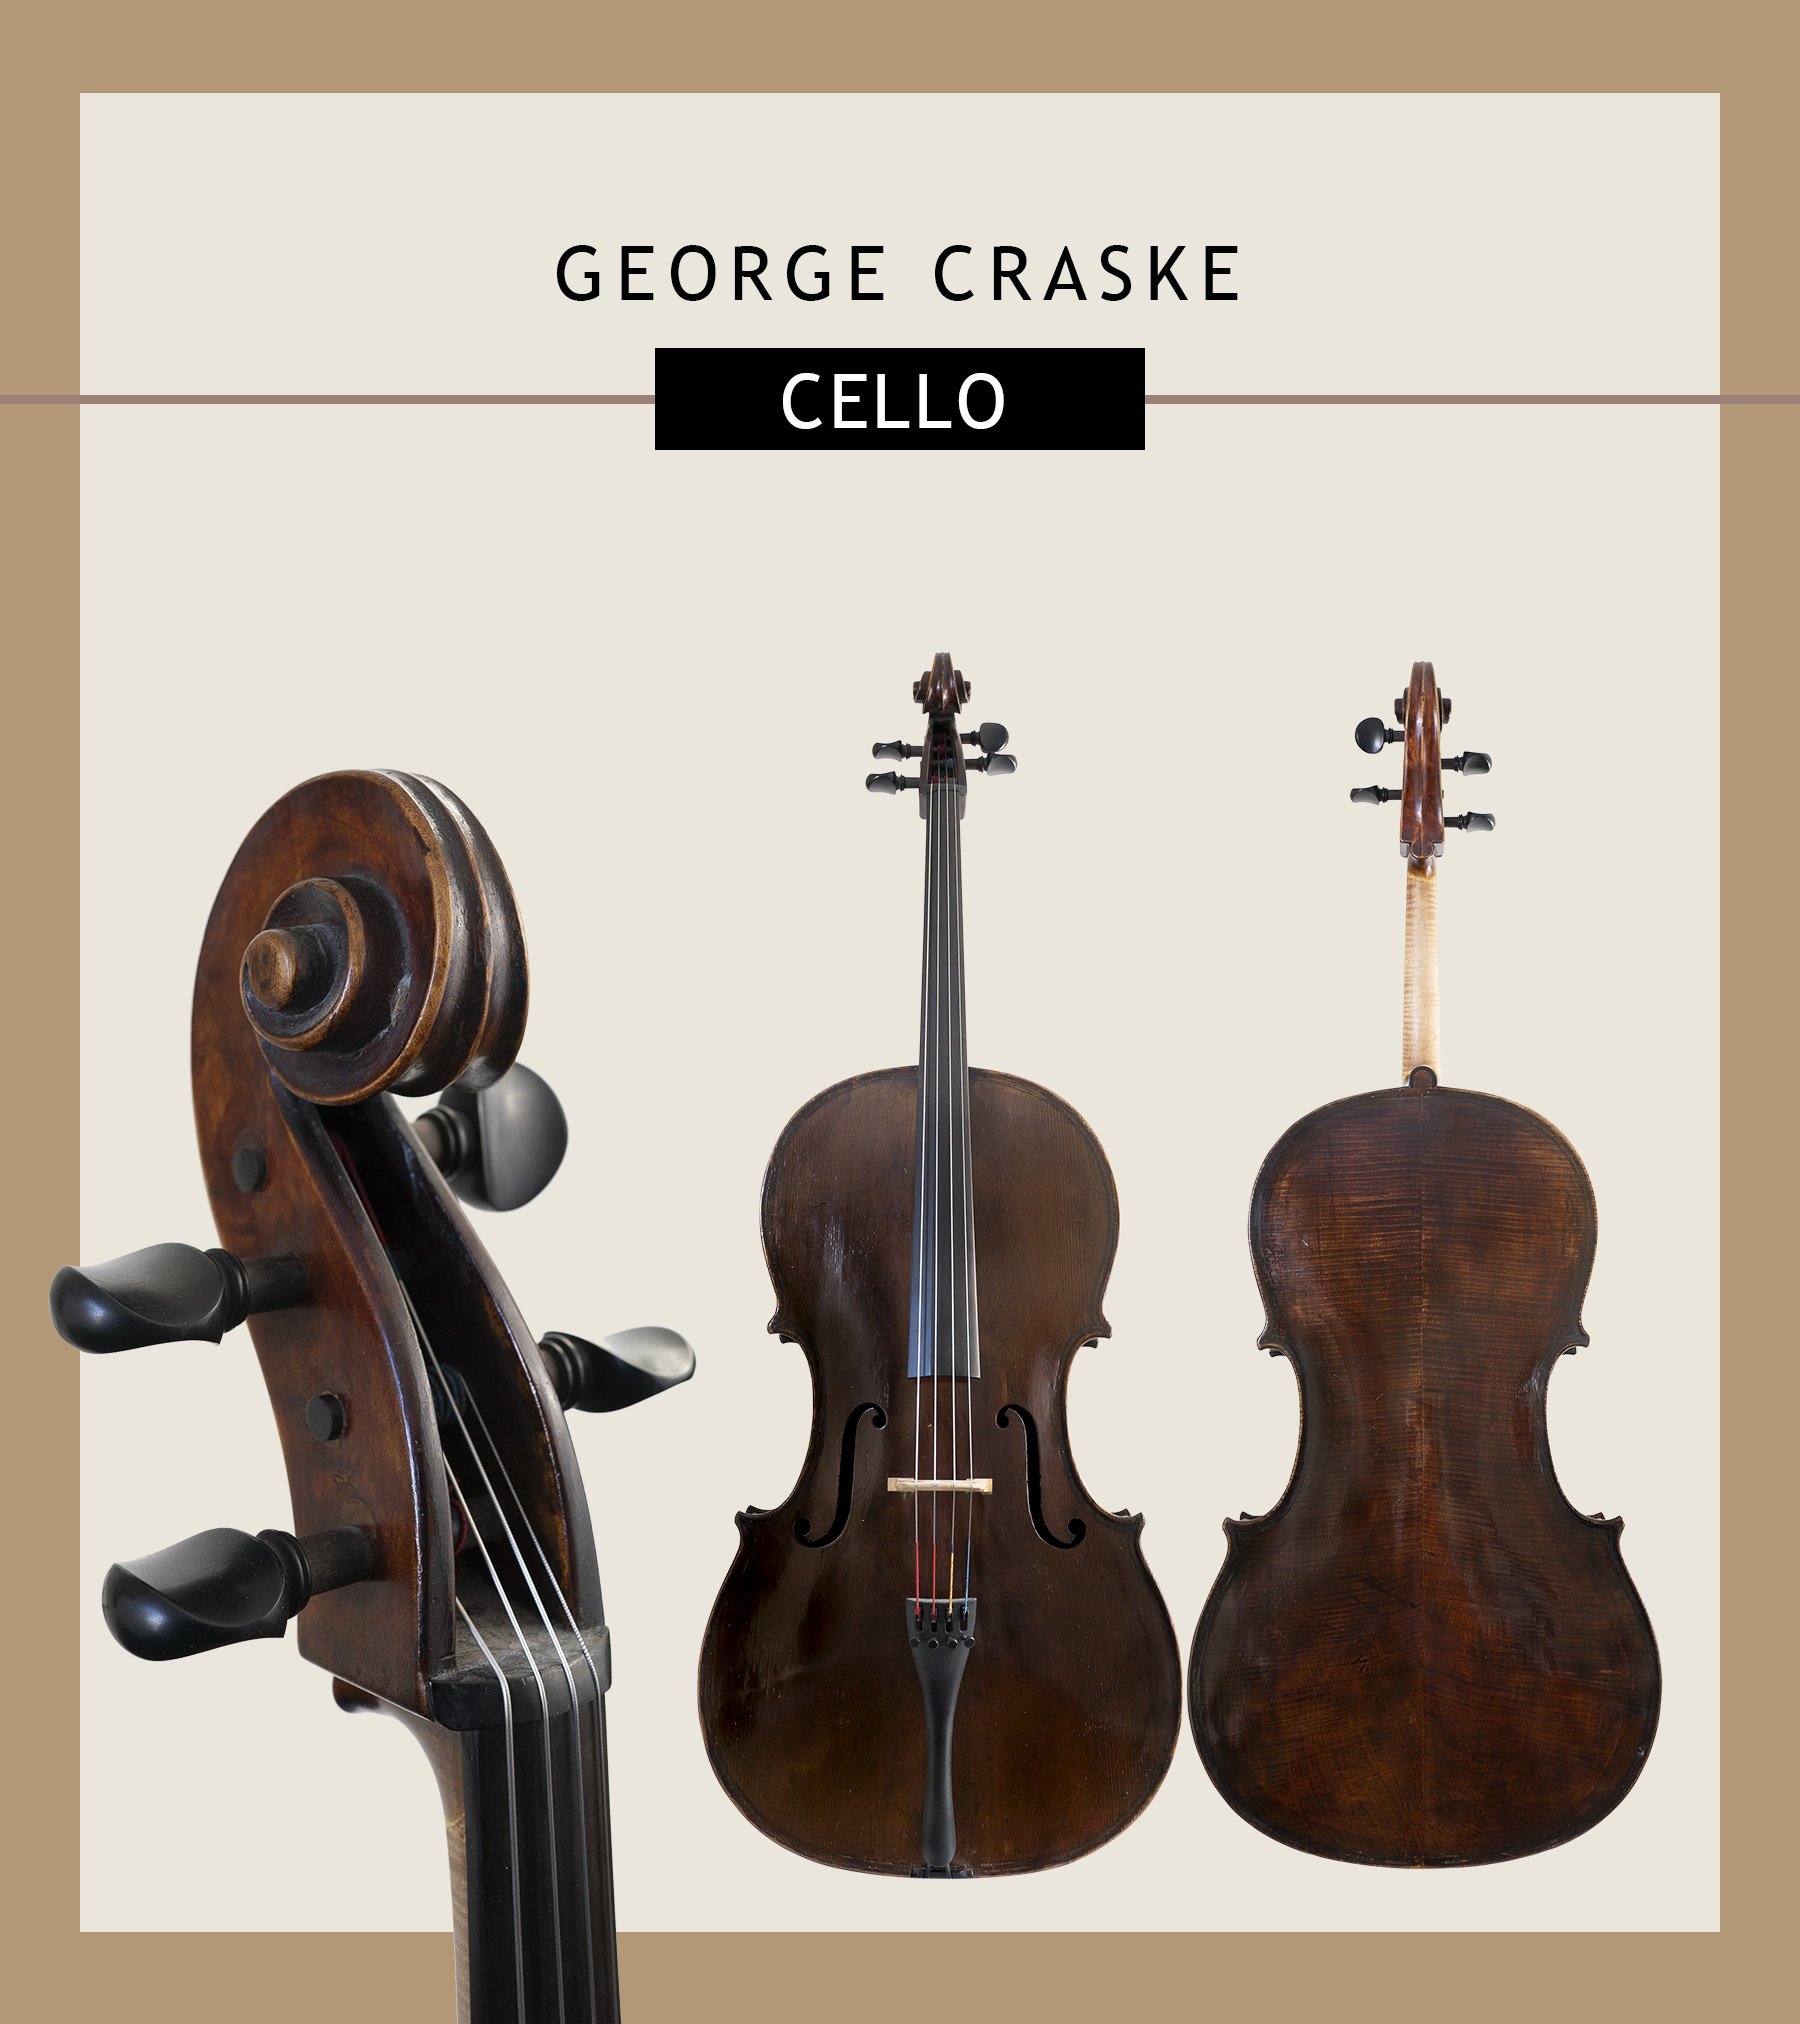 George-Craske-Cello-Emailer.jpg